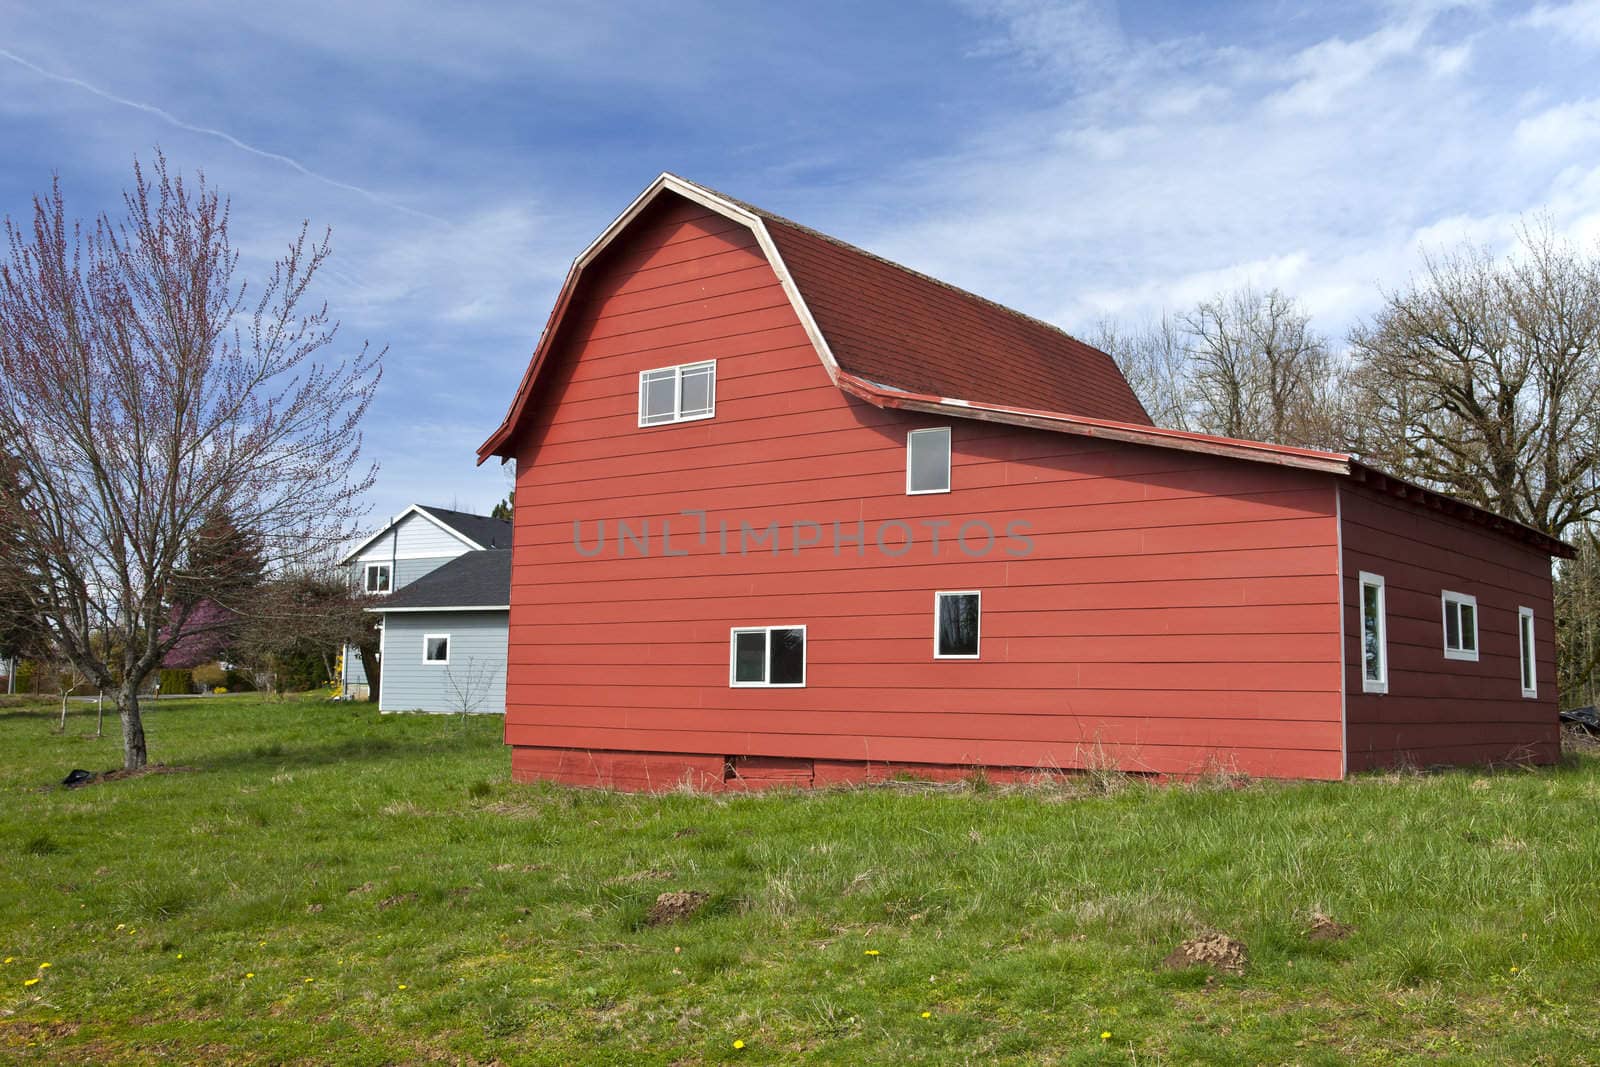 Red barn in rural Oregon.